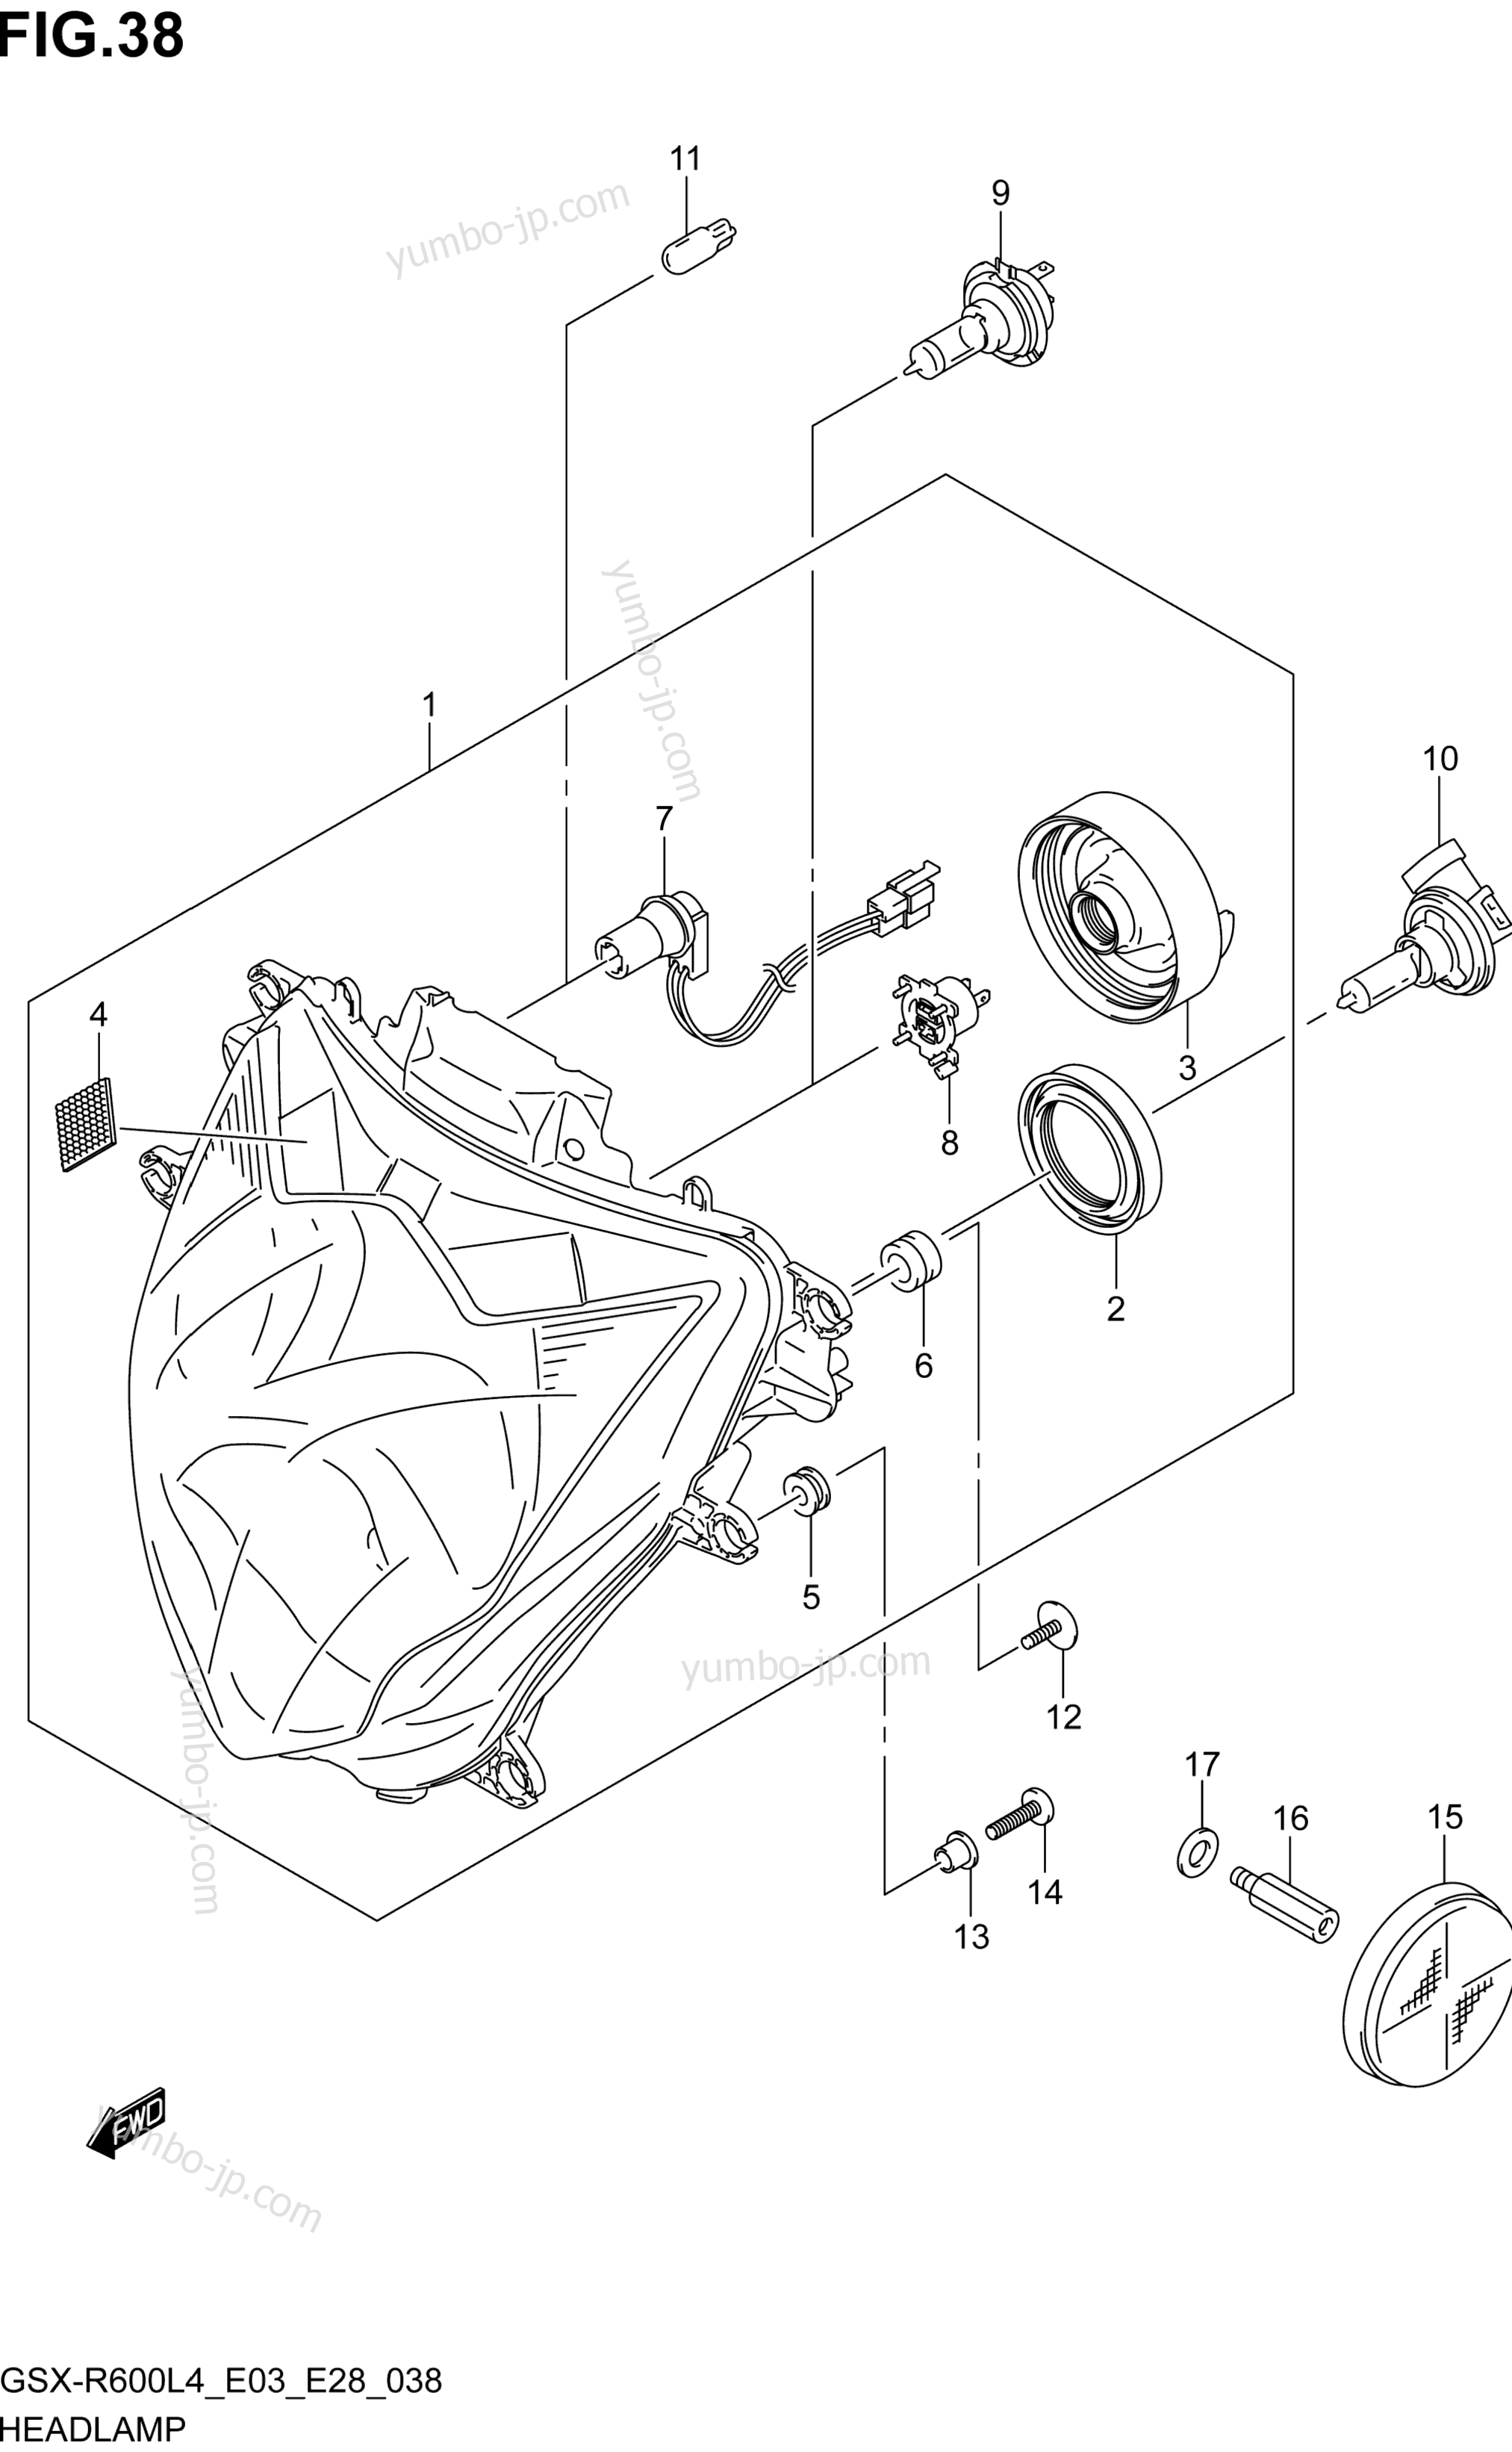 HEADLAMP (GSX-R600L4 E03) for motorcycles SUZUKI GSX-R600 2014 year